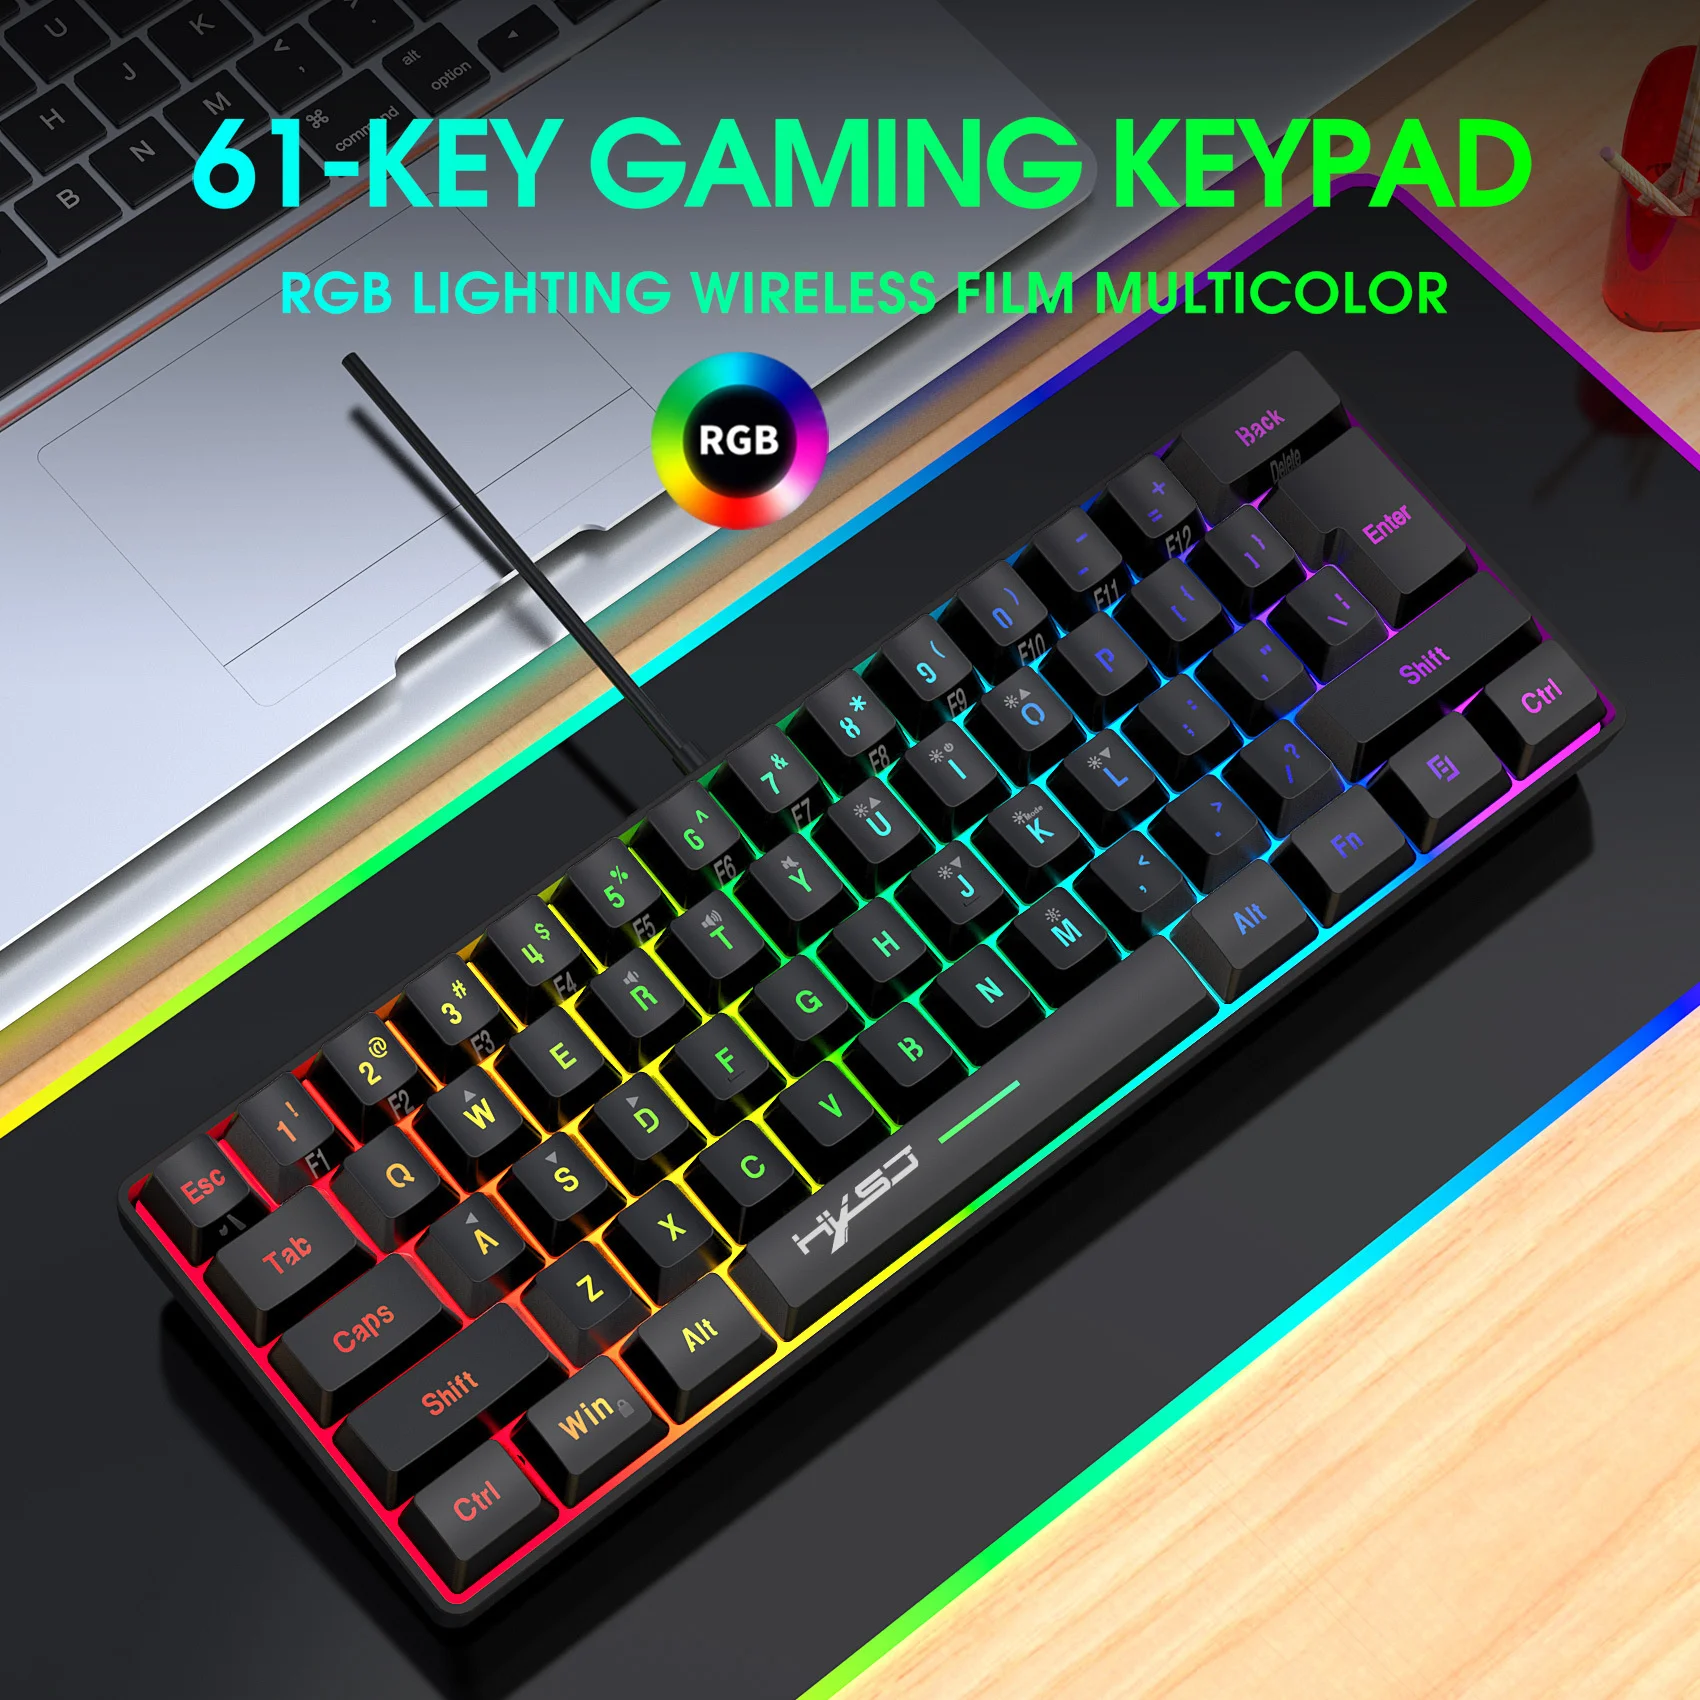 

Wired Gaming Keyboard 61 Keys Ergonomic RGB Backlit Keyboard USB Mini Mechanical Feel Gamer Keyboard For Computer Laptop Desktop